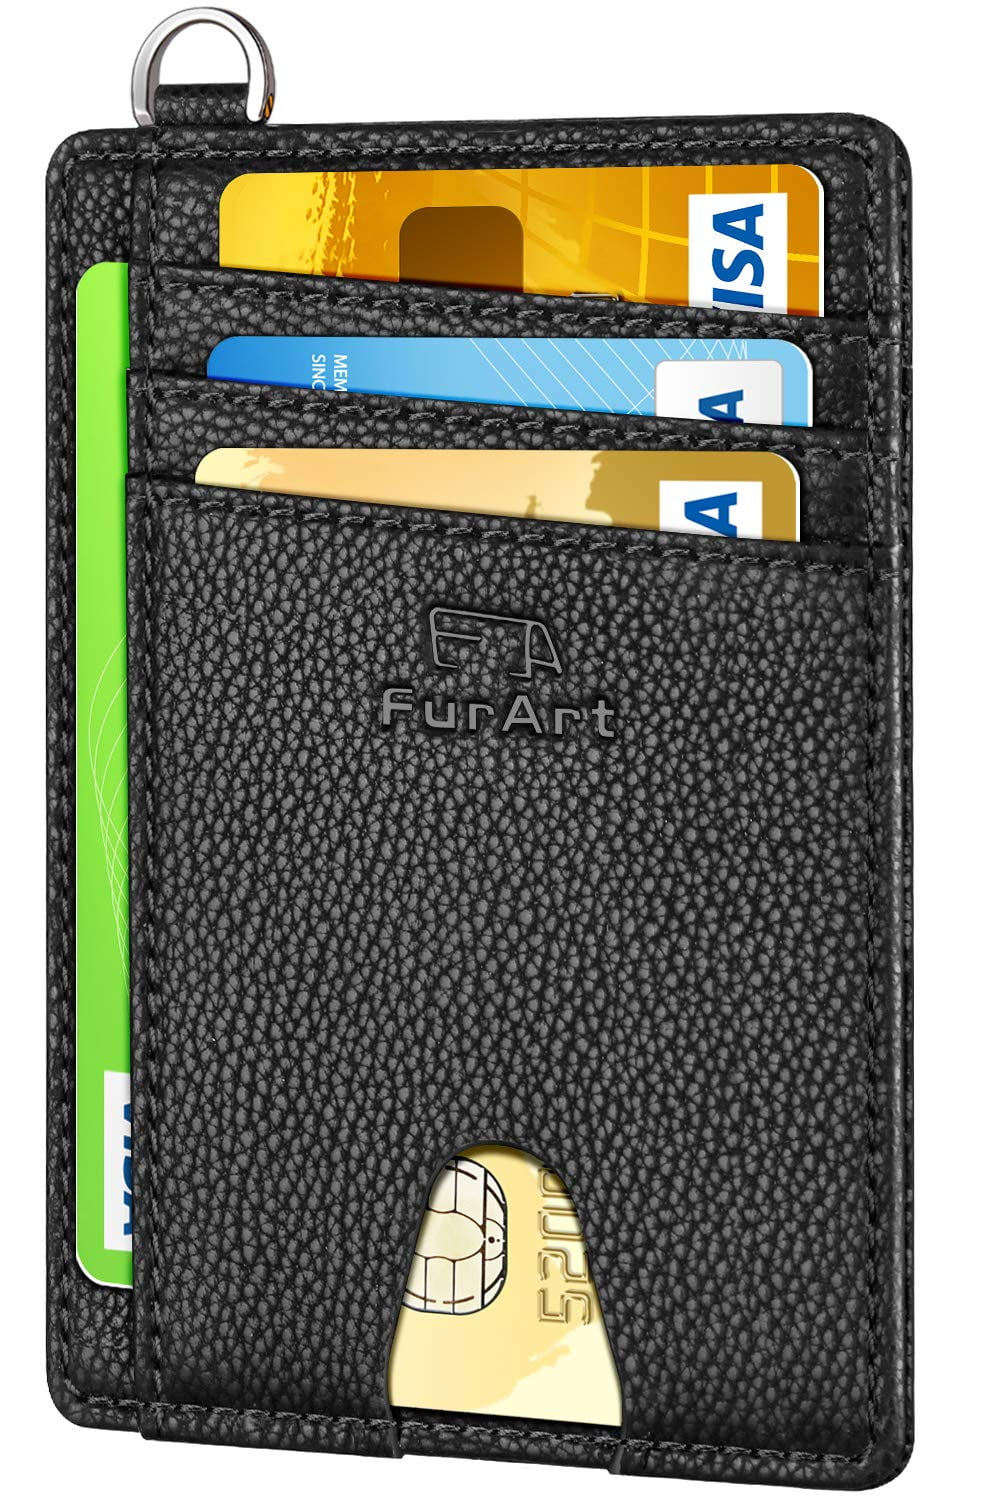 FurArt Slim Minimalist Wallet, Front Pocket Wallets, RFID Blocking ...